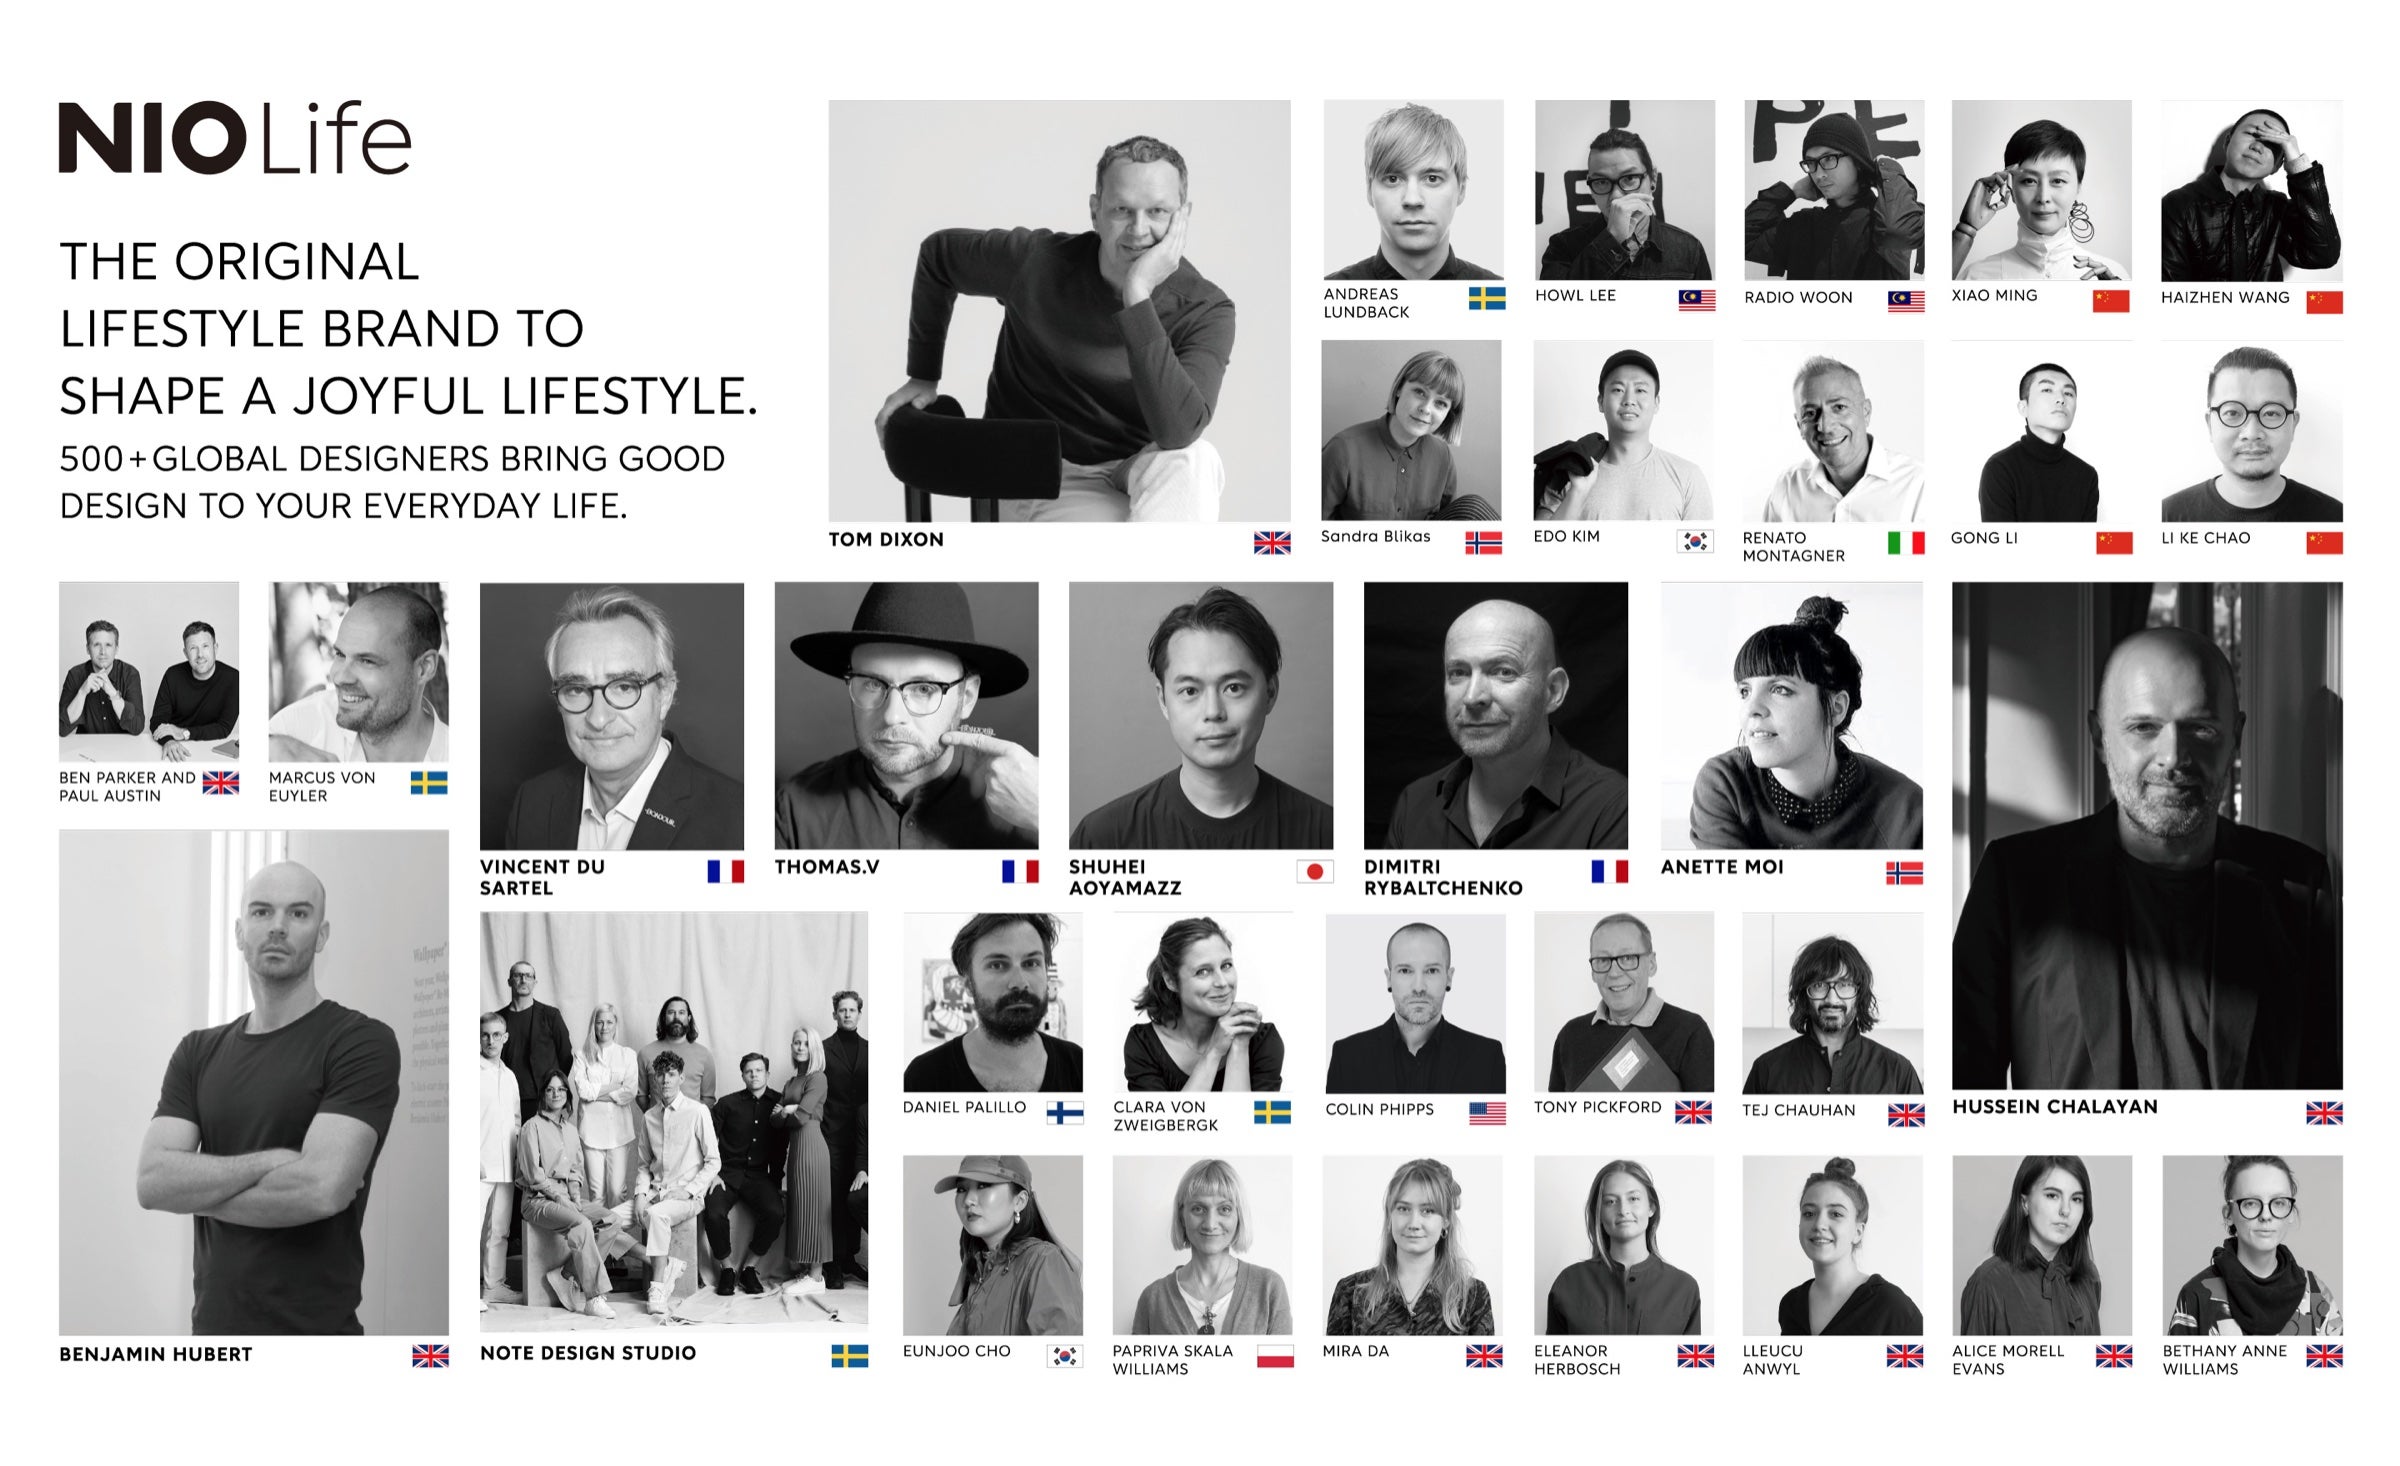 500+ designers across the world